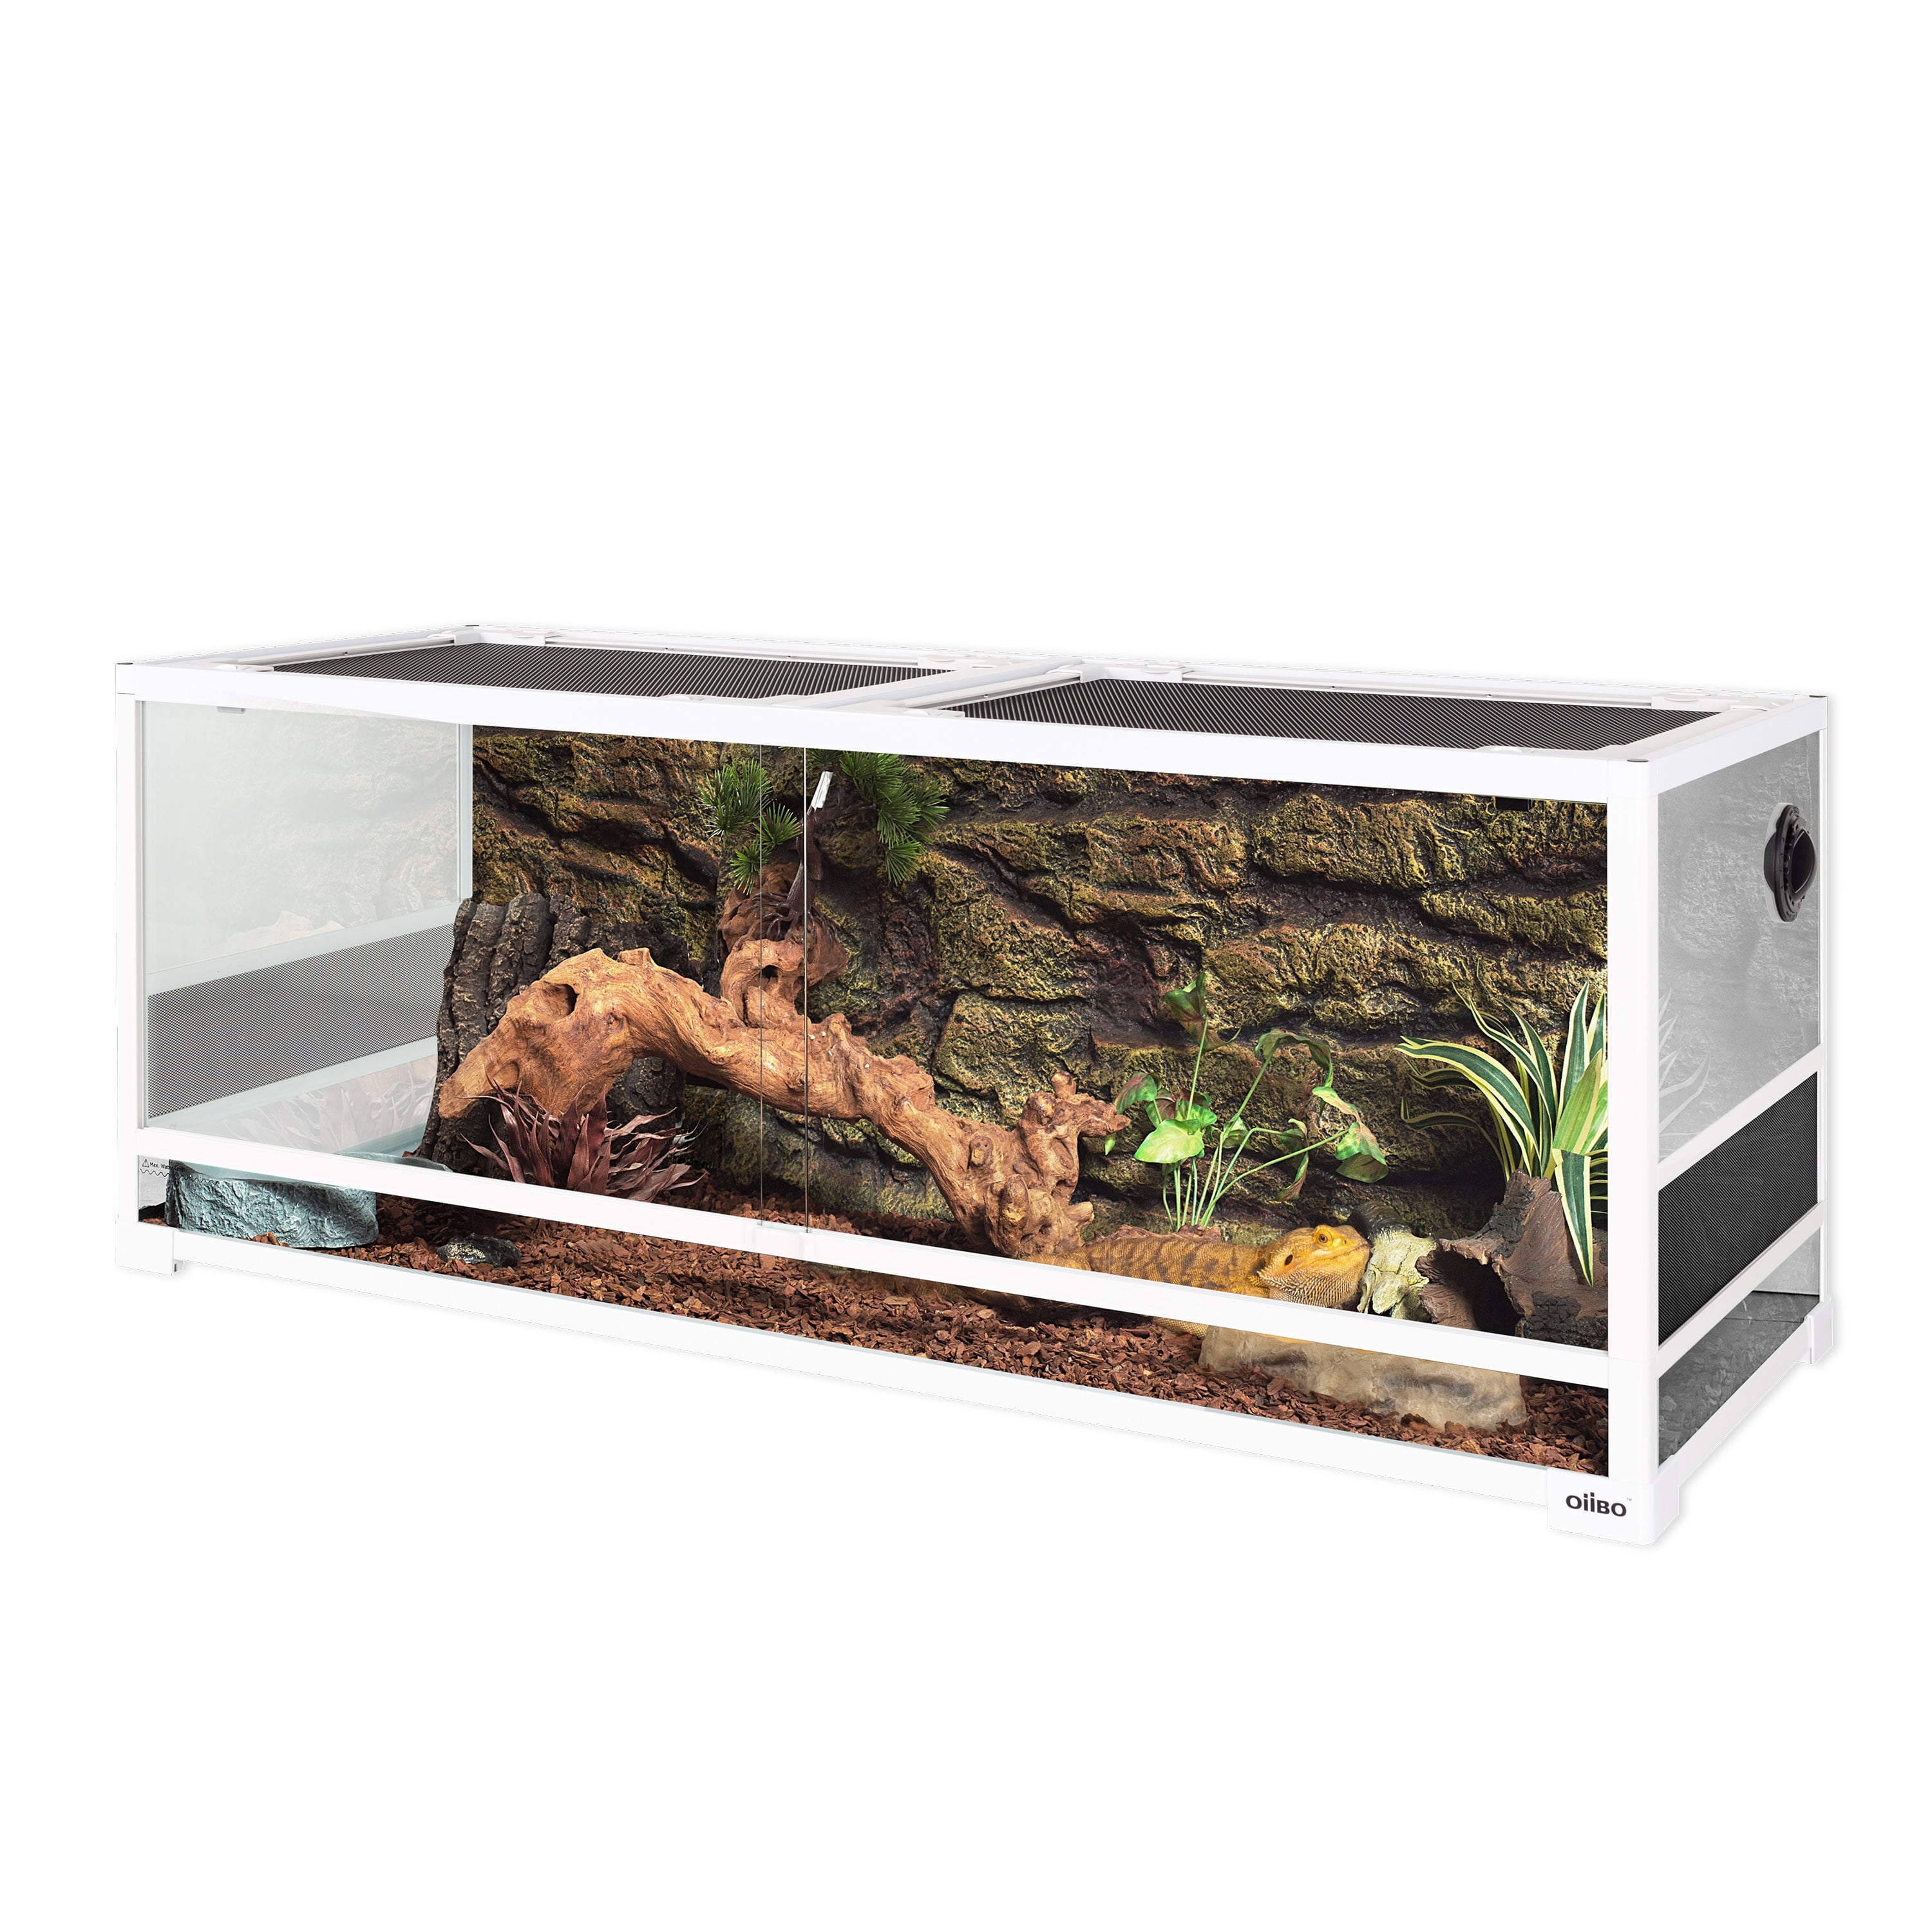 OiiBO Reptile Glass Terrarium, Sliding Doors with Screen Ventilation ...